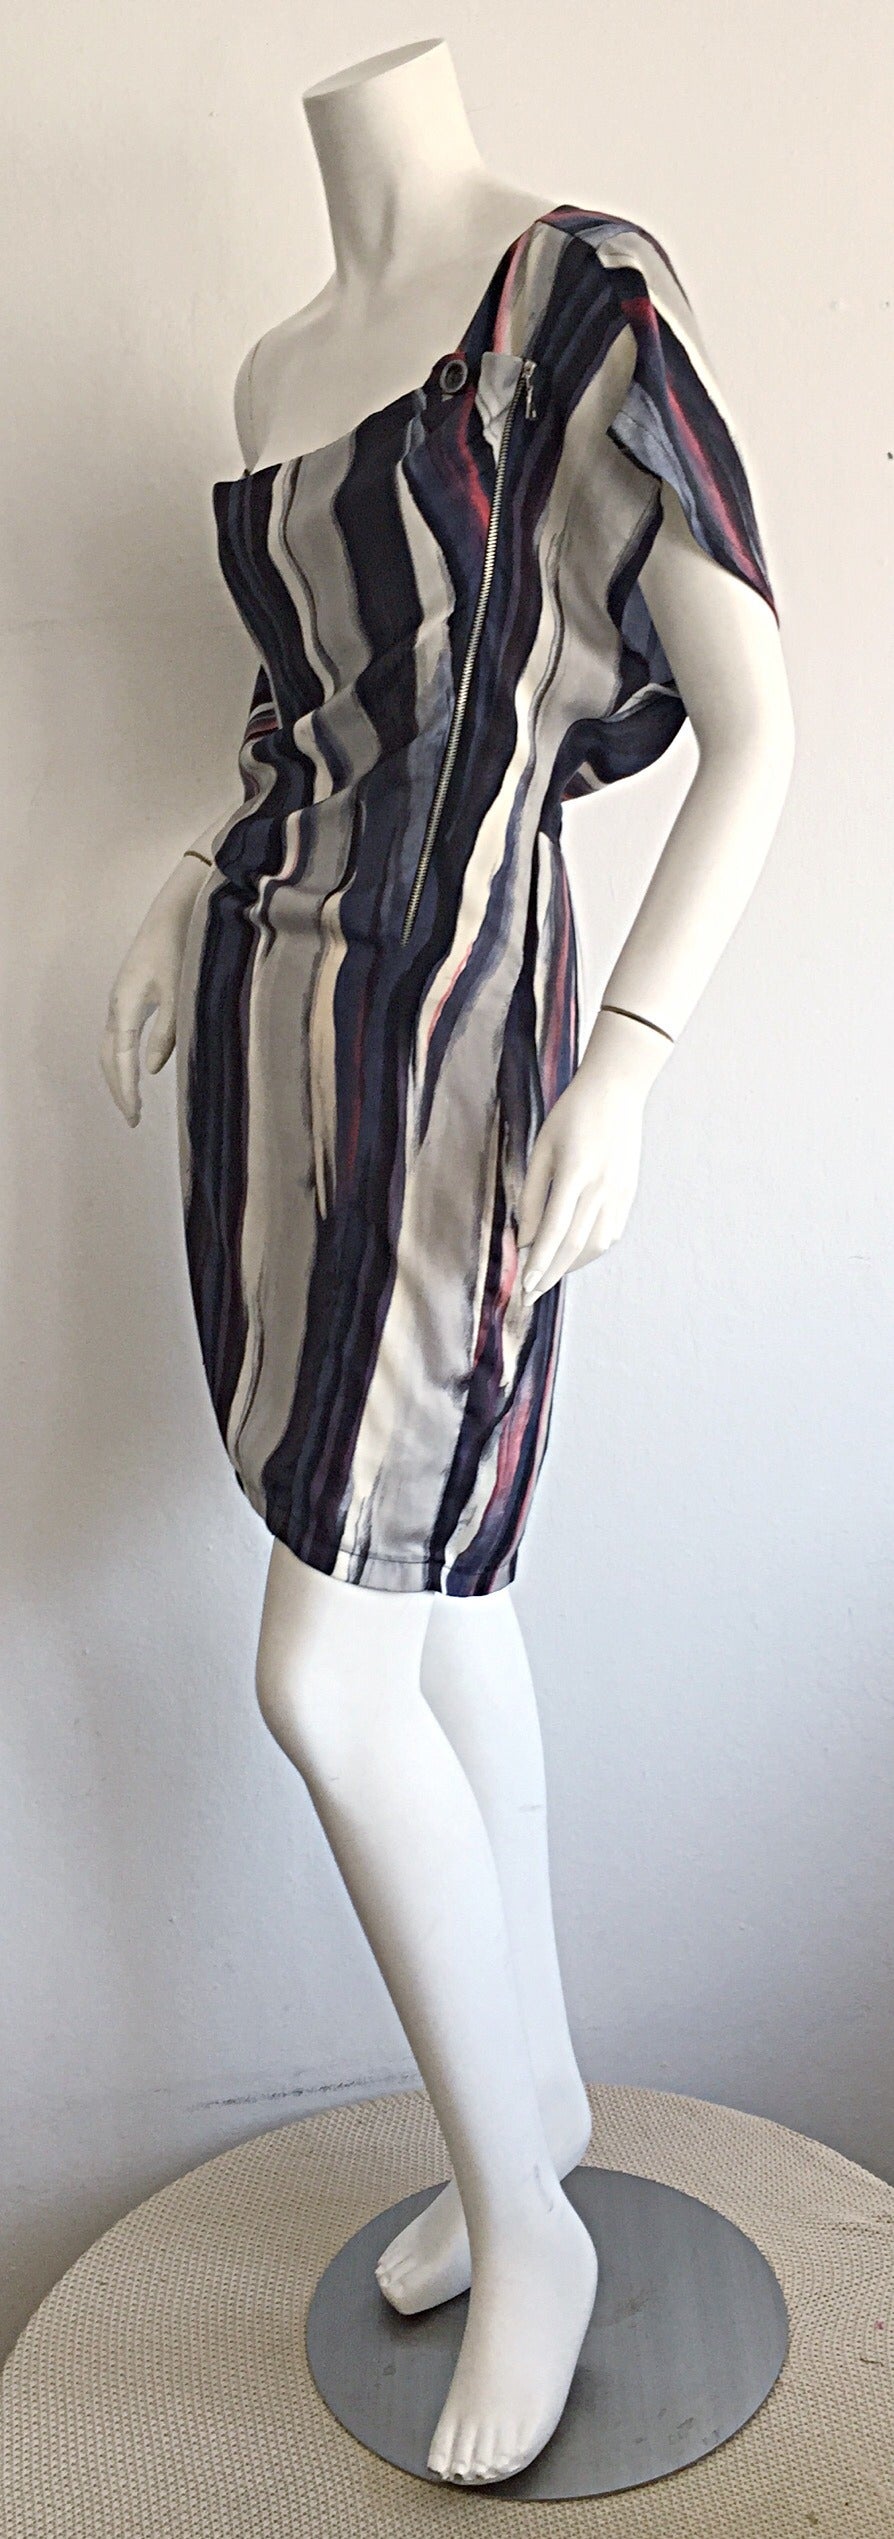 striped designer dress